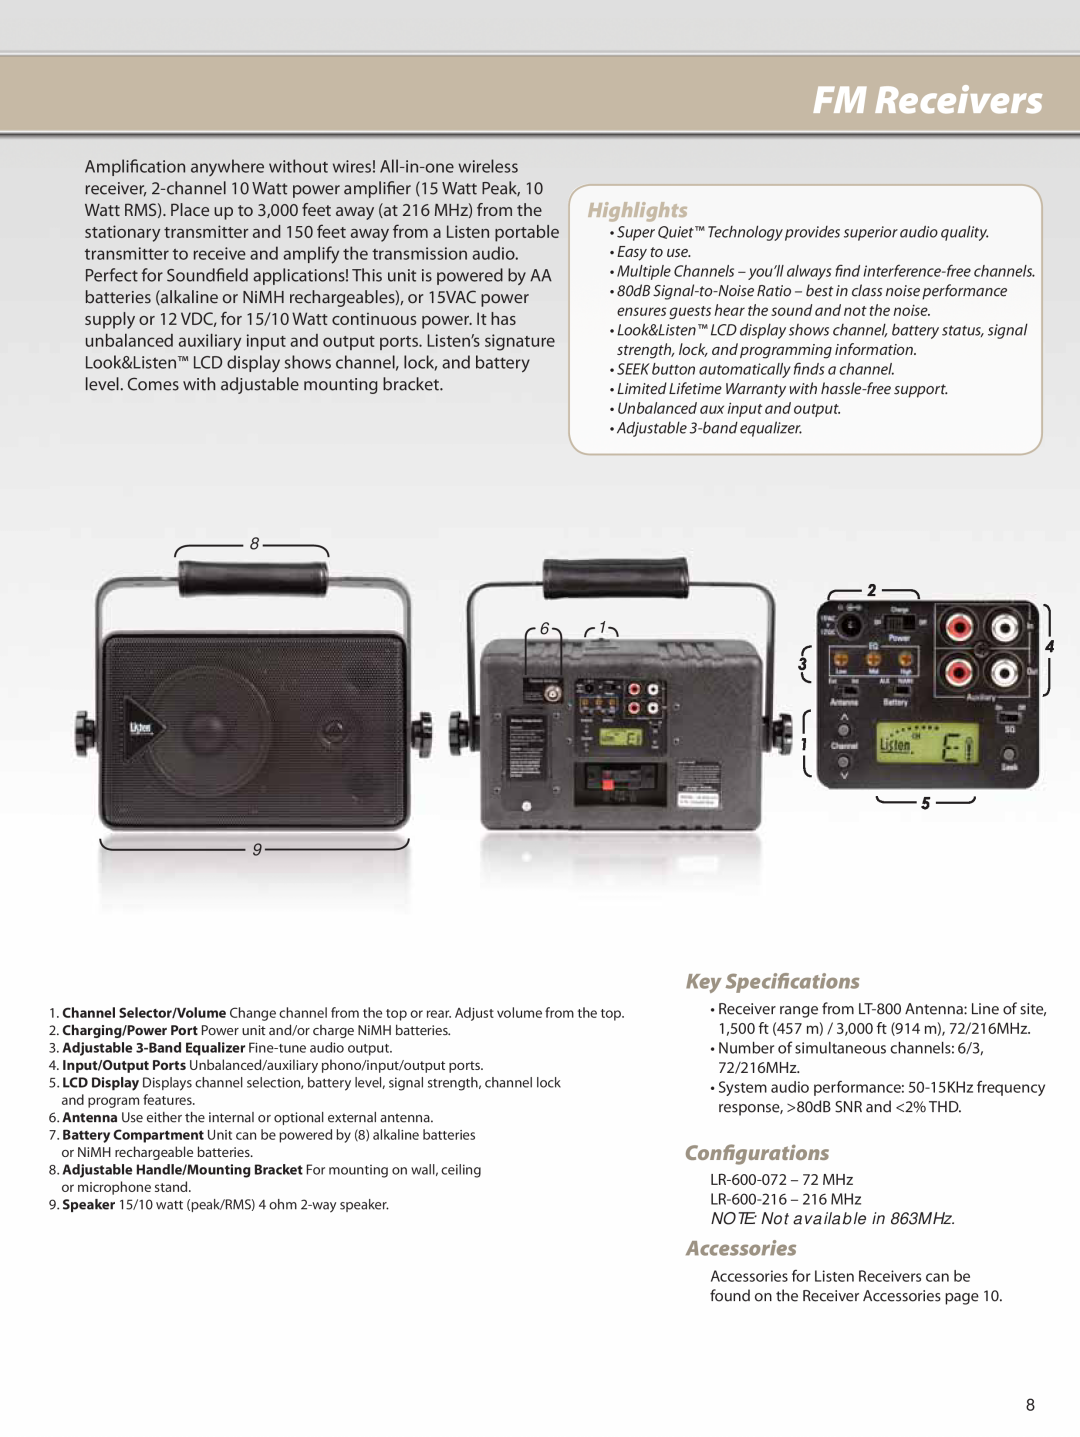 Listen Technologies LA-101 8 6 9, •Unbalanced aux input and output, •Adjustable 3-bandequalizer, 2 1 4 3, FM Receivers 